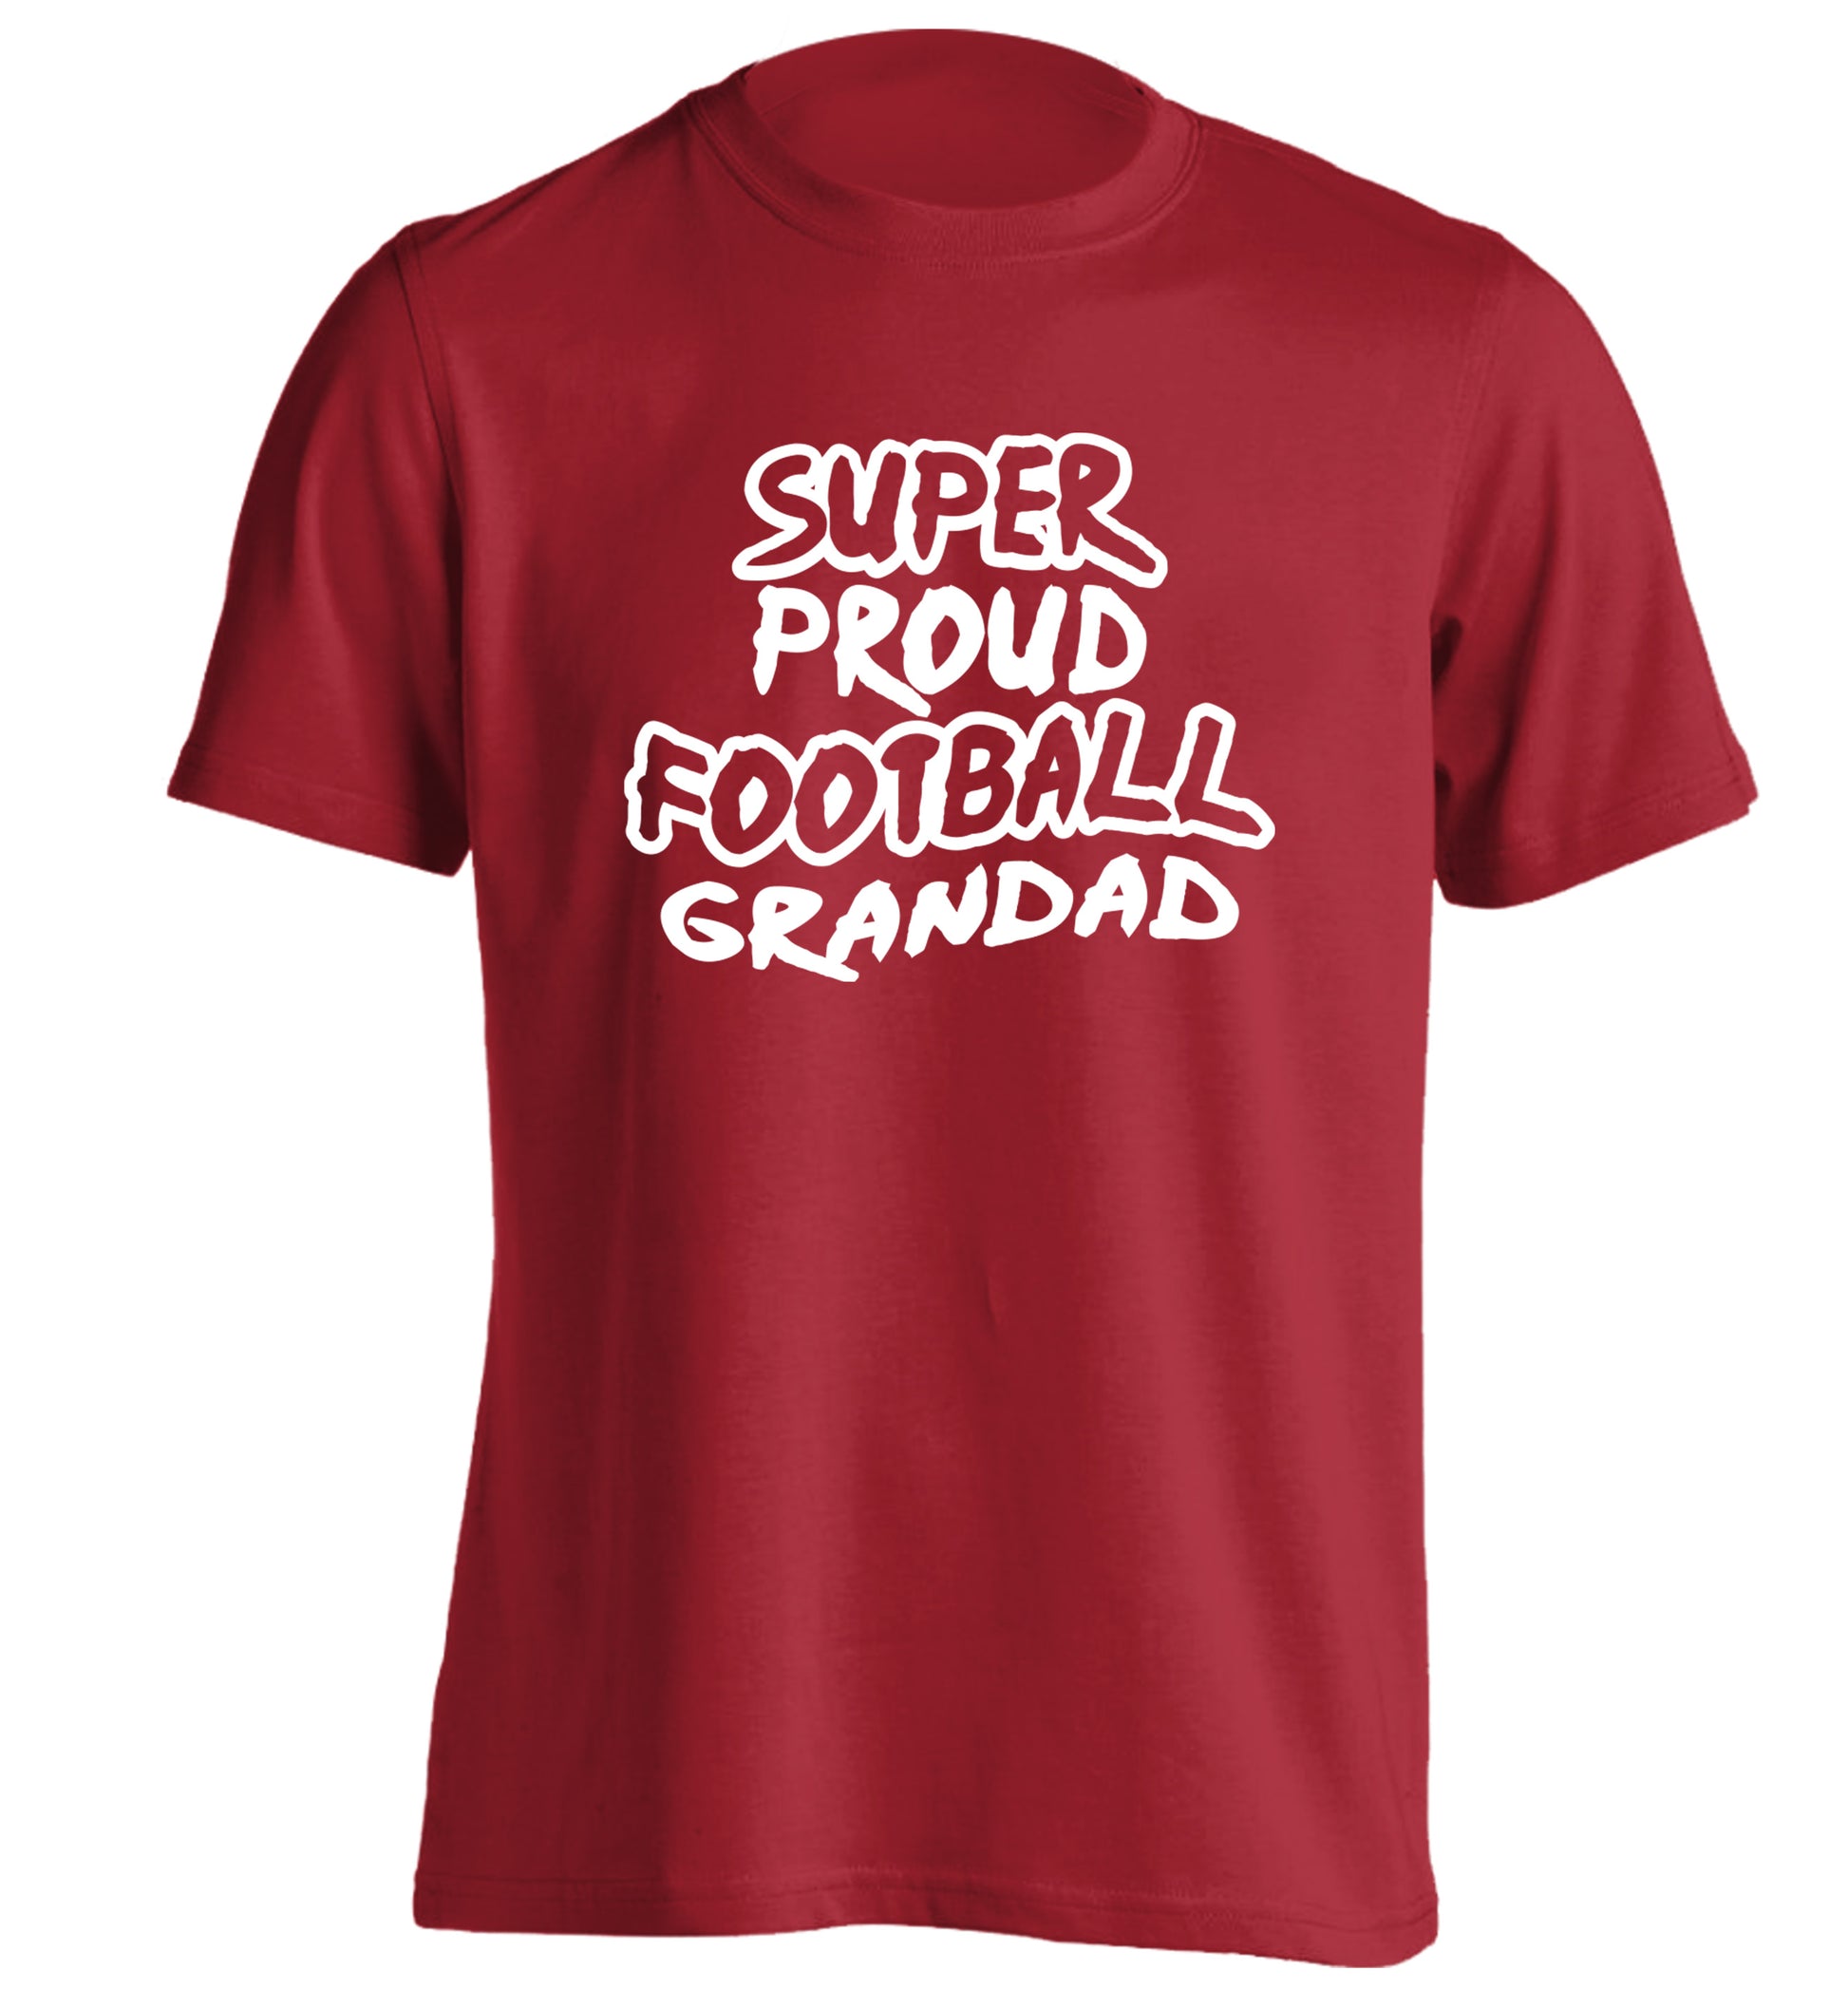 Super proud football grandad adults unisexred Tshirt 2XL